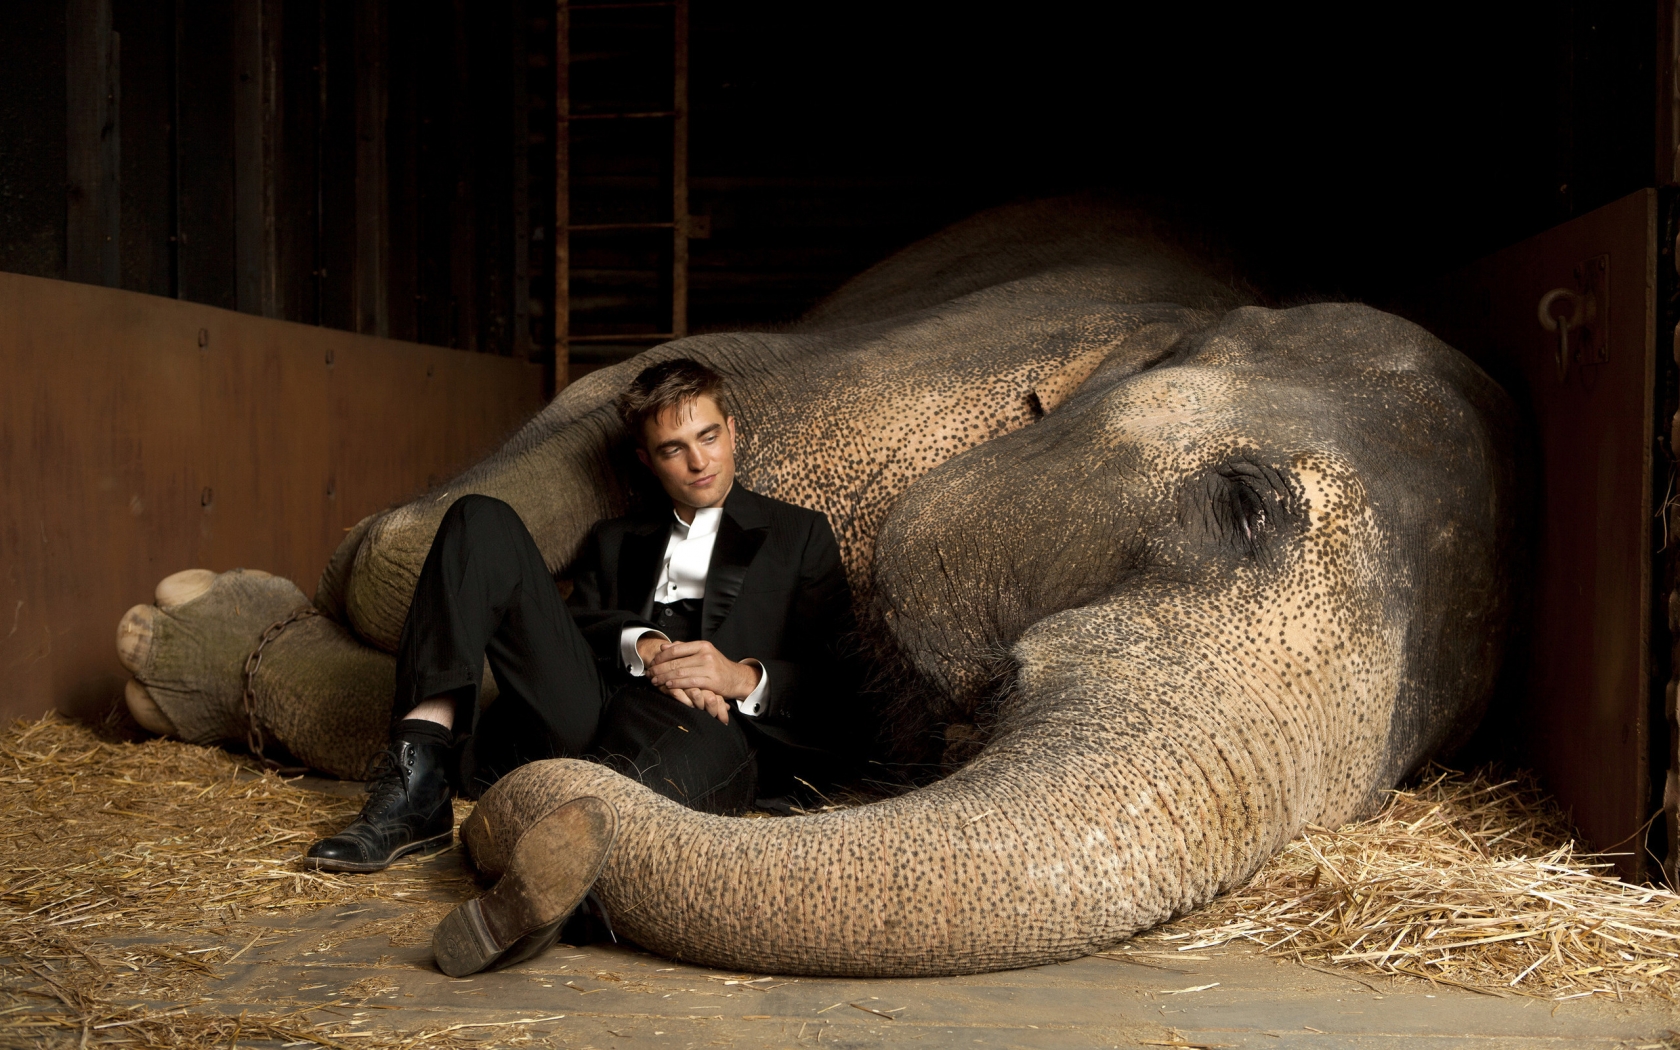 Robert Pattinson Close to Elephant for 1680 x 1050 widescreen resolution